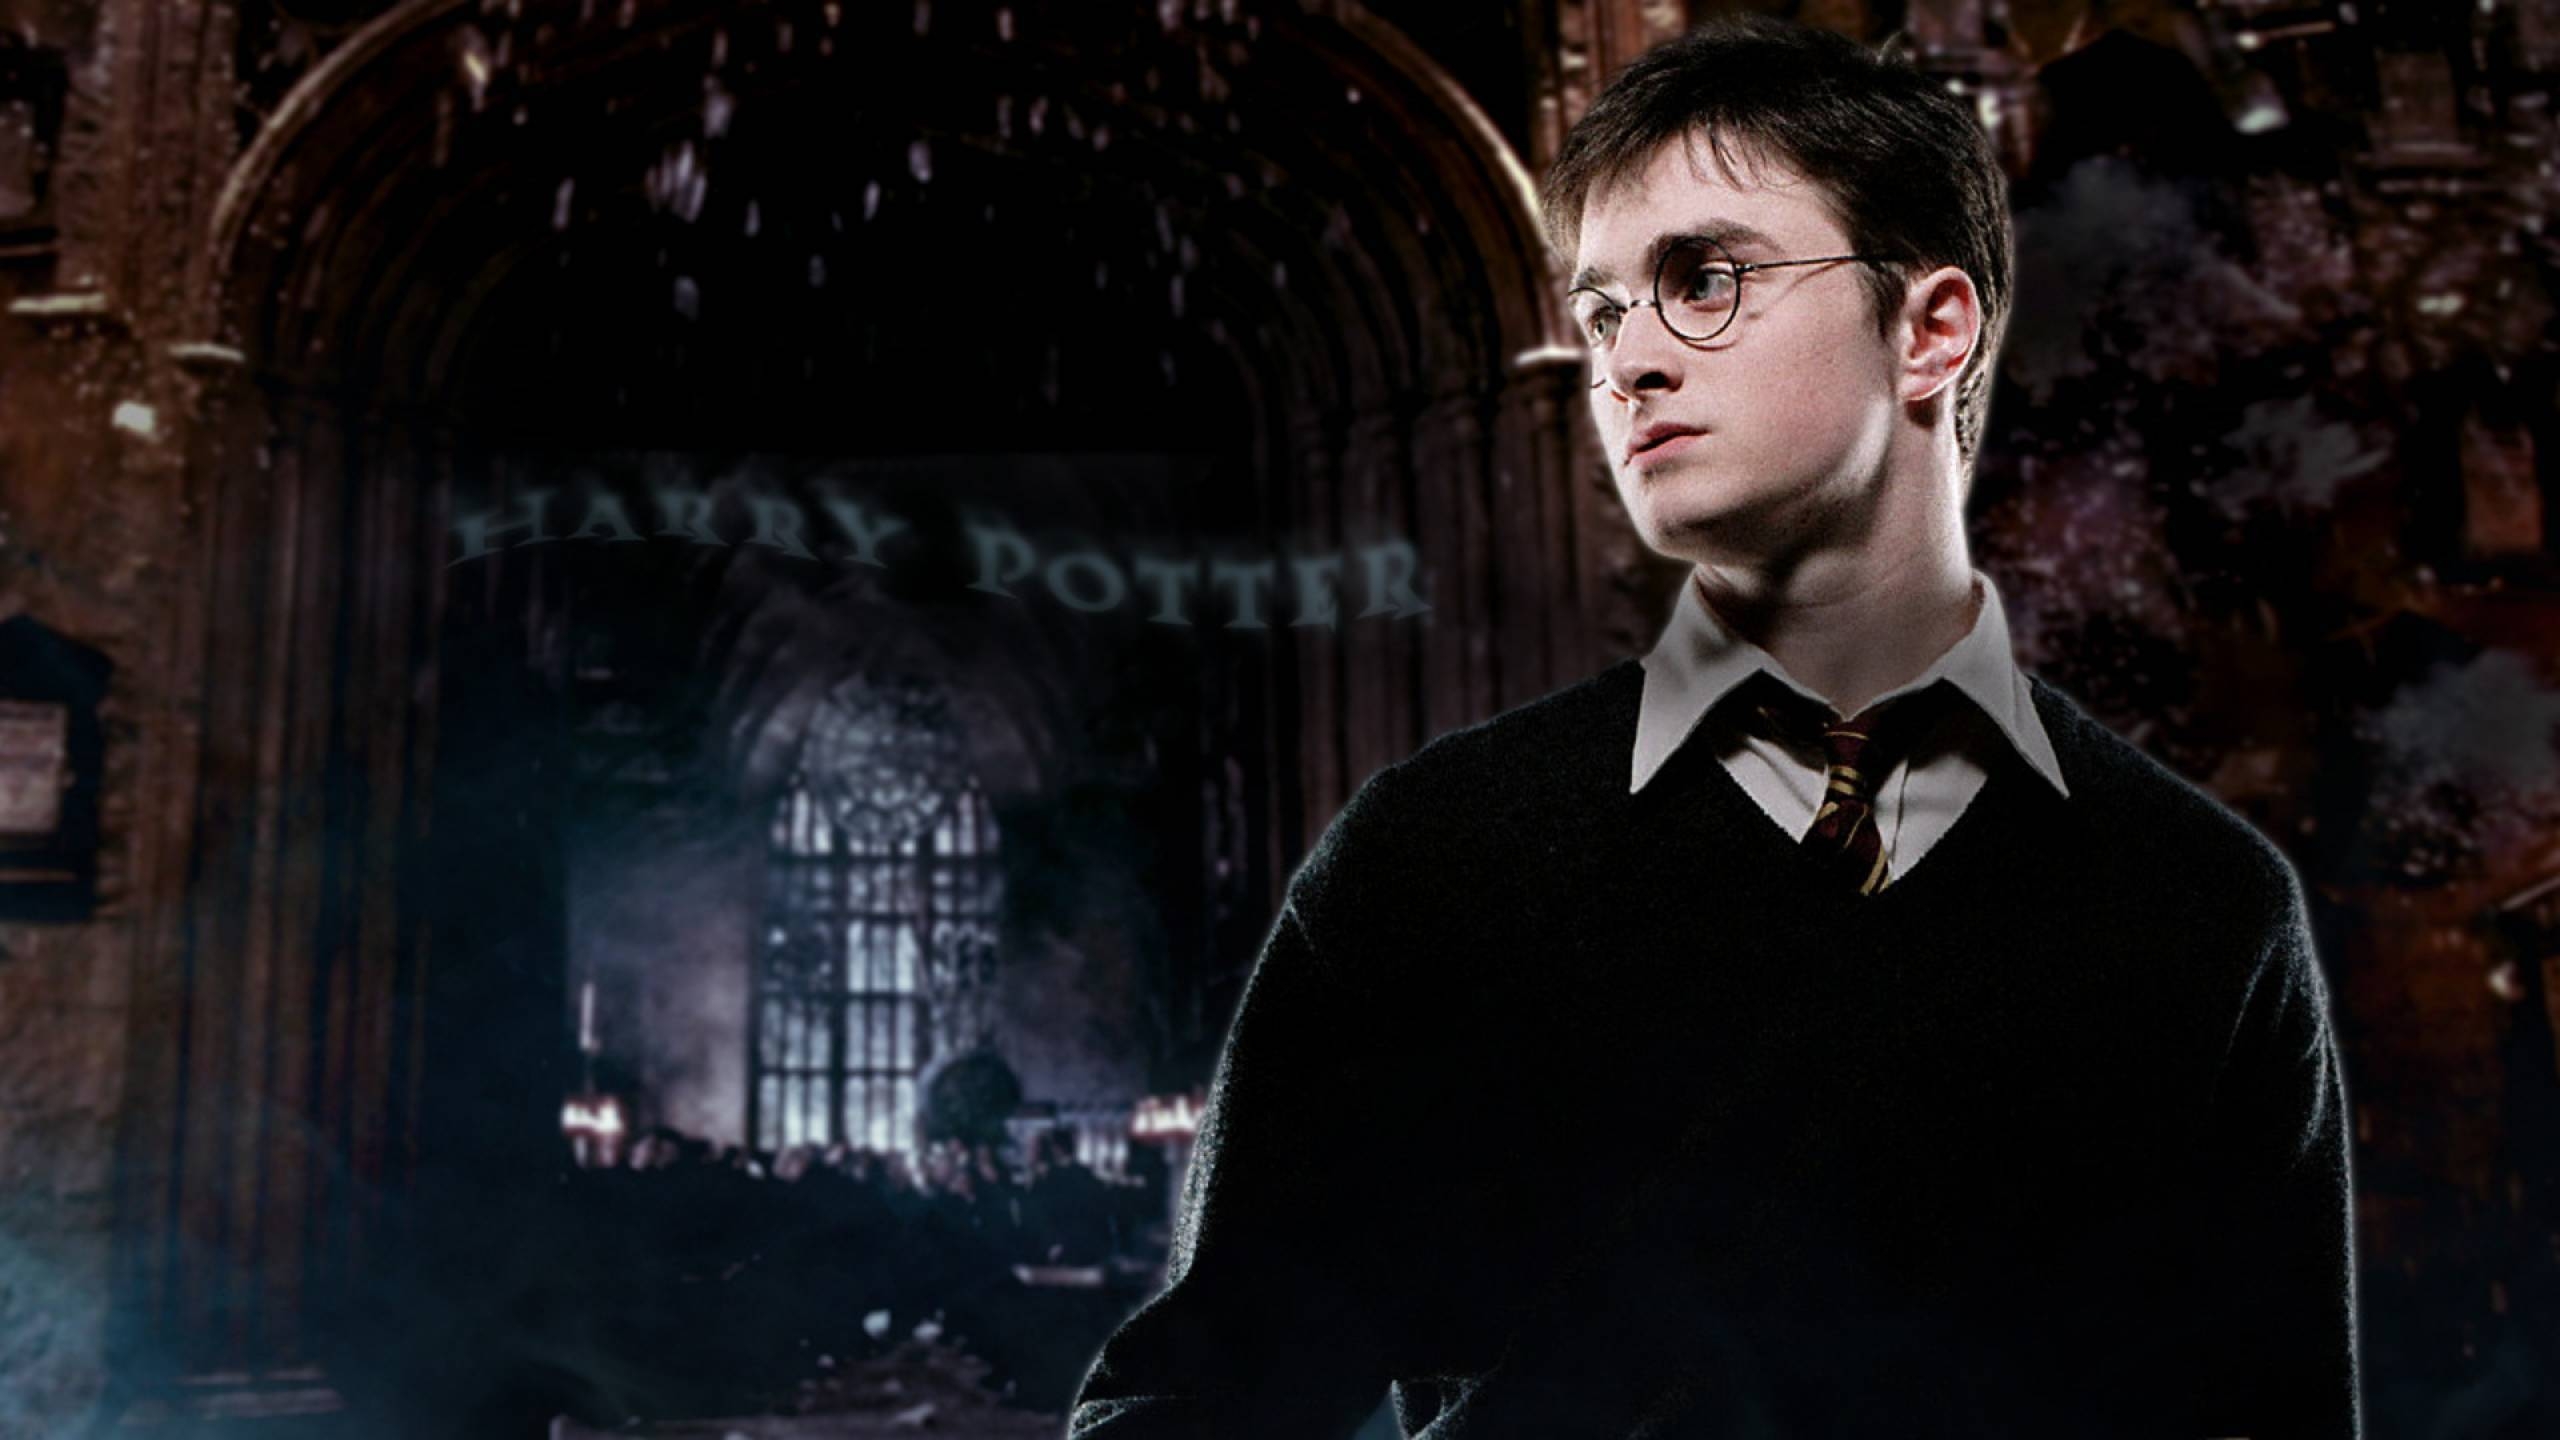 Harry Potter Daniel Radcliffe for 2560x1440 HDTV resolution